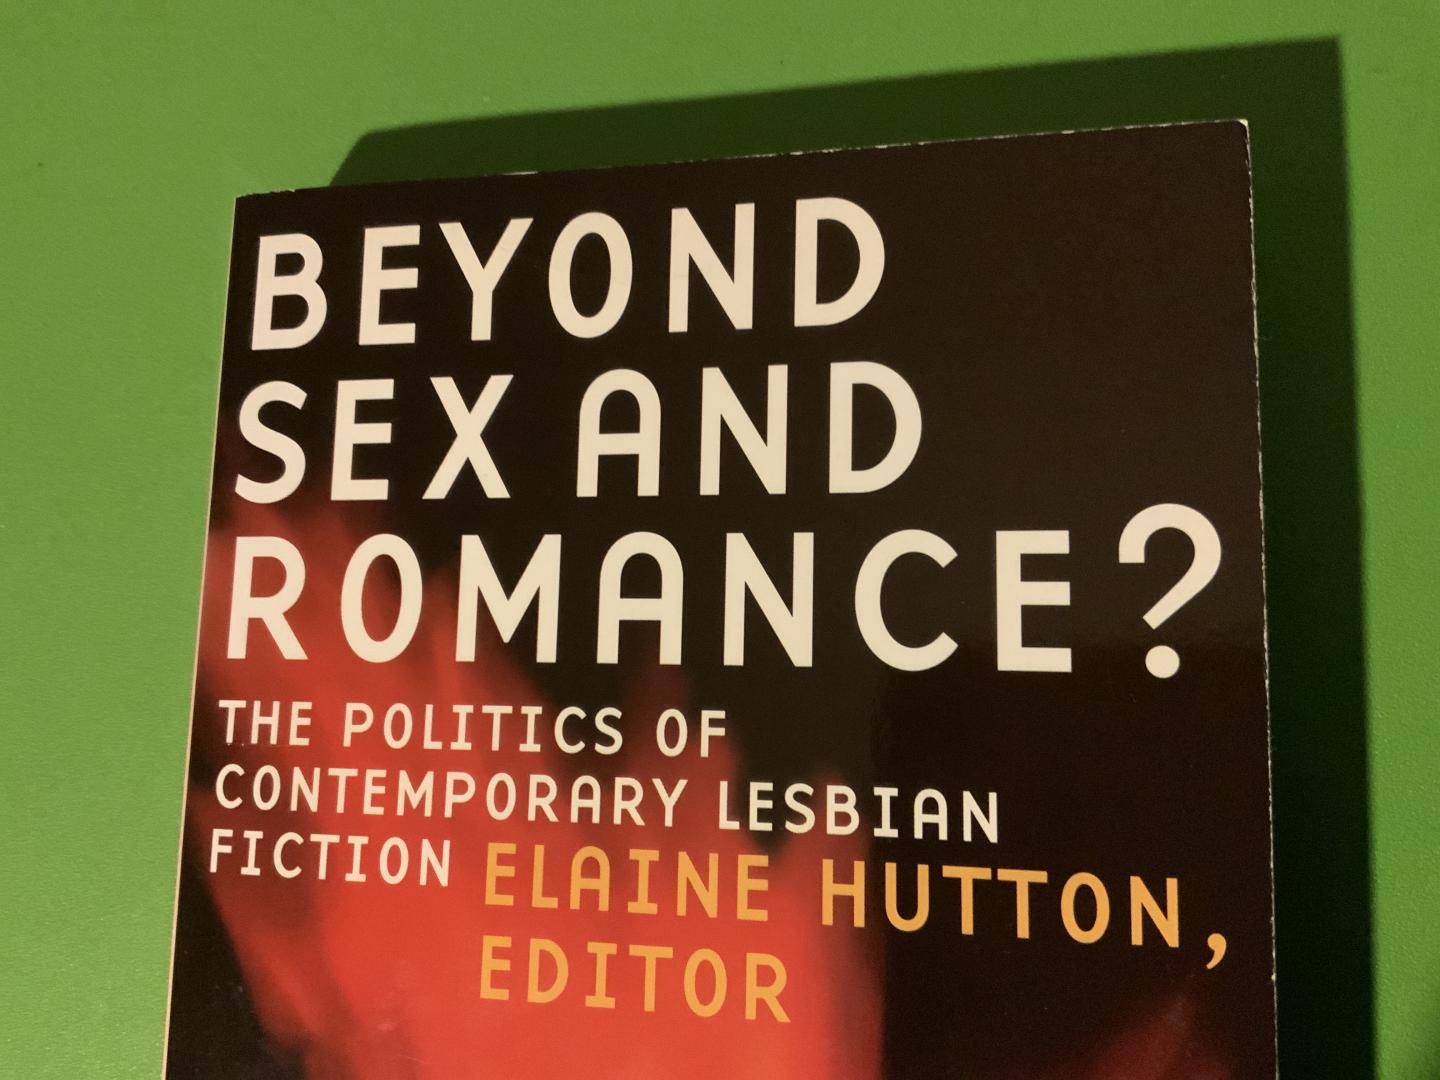 Hutton, Elaine (ed) - Beyond Sex and Romance? / The Politics of Contemporary Lesbian Fiction